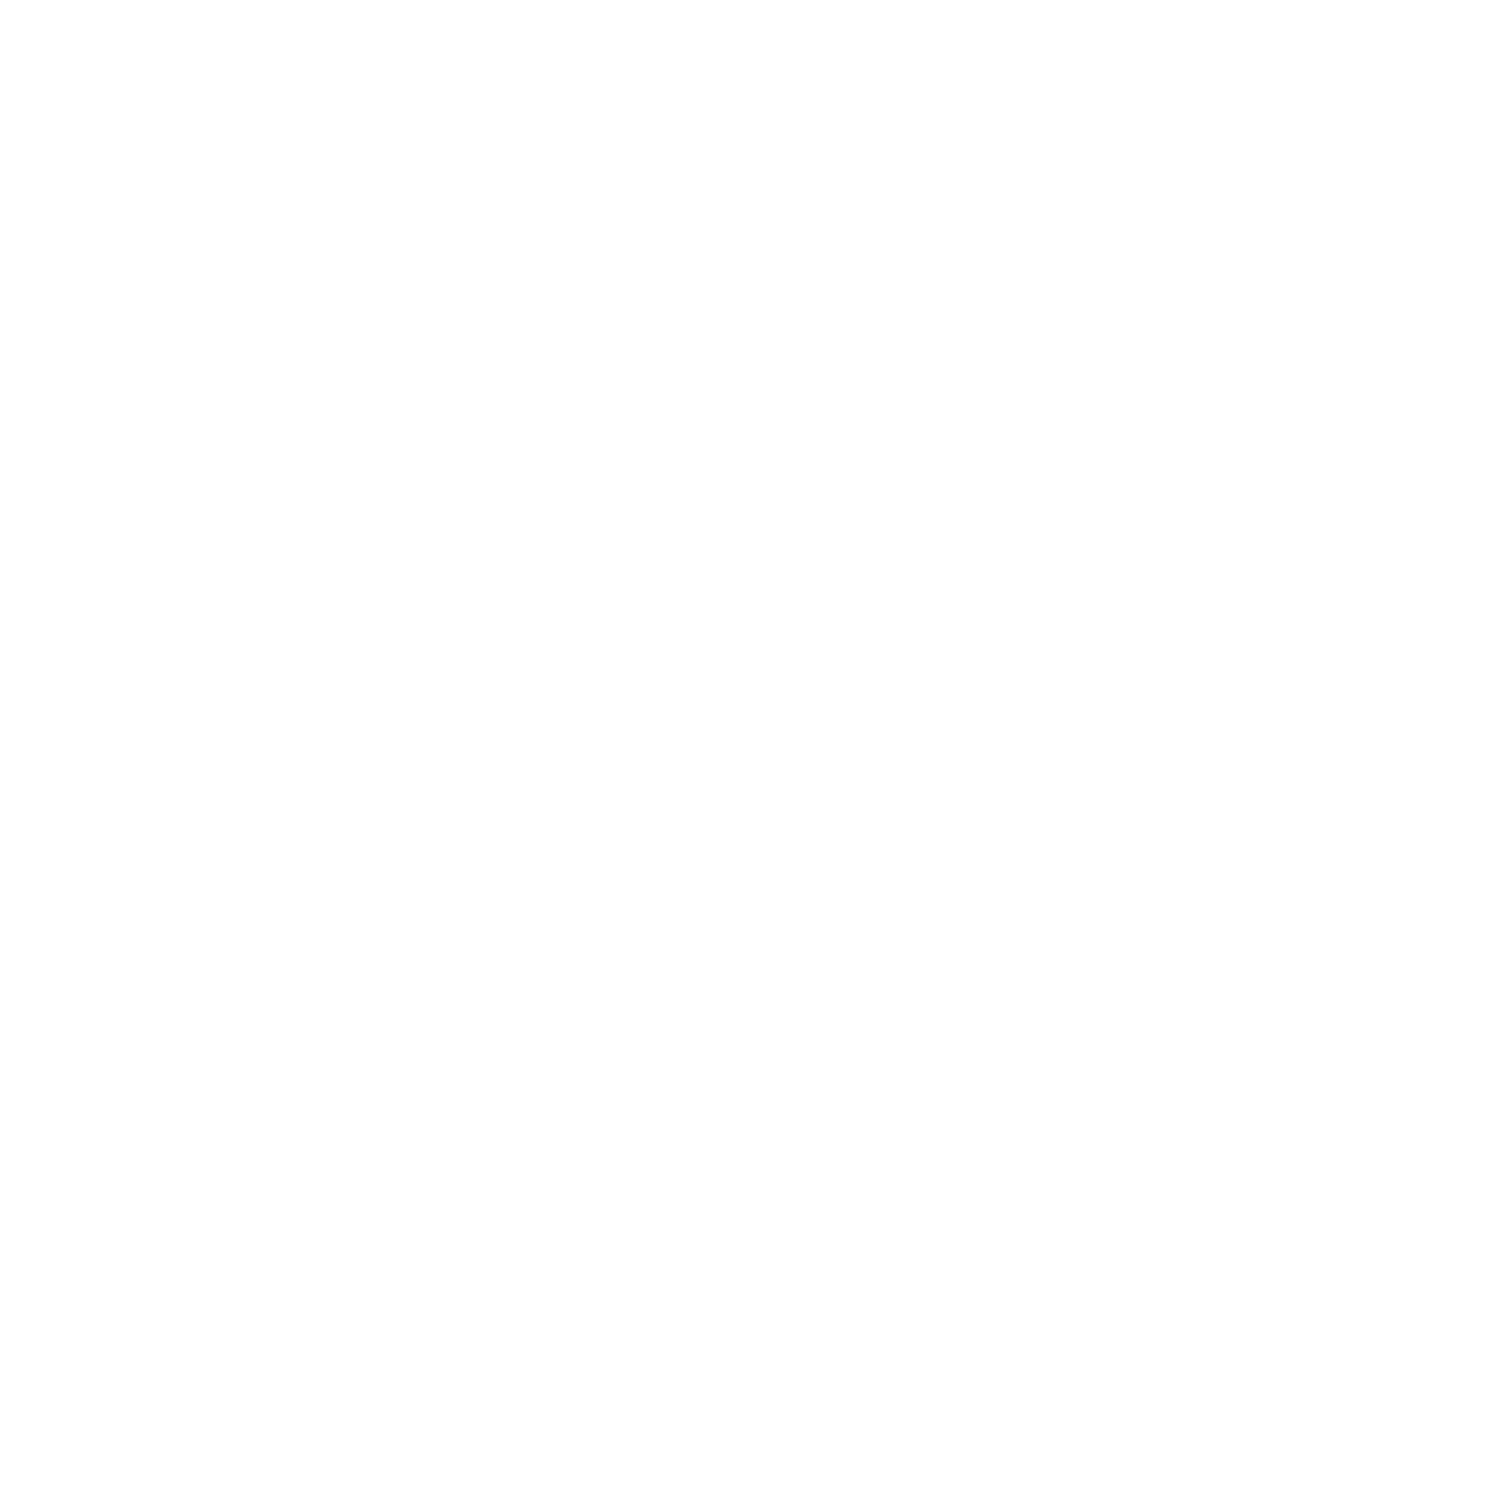 Good Dwellings Group